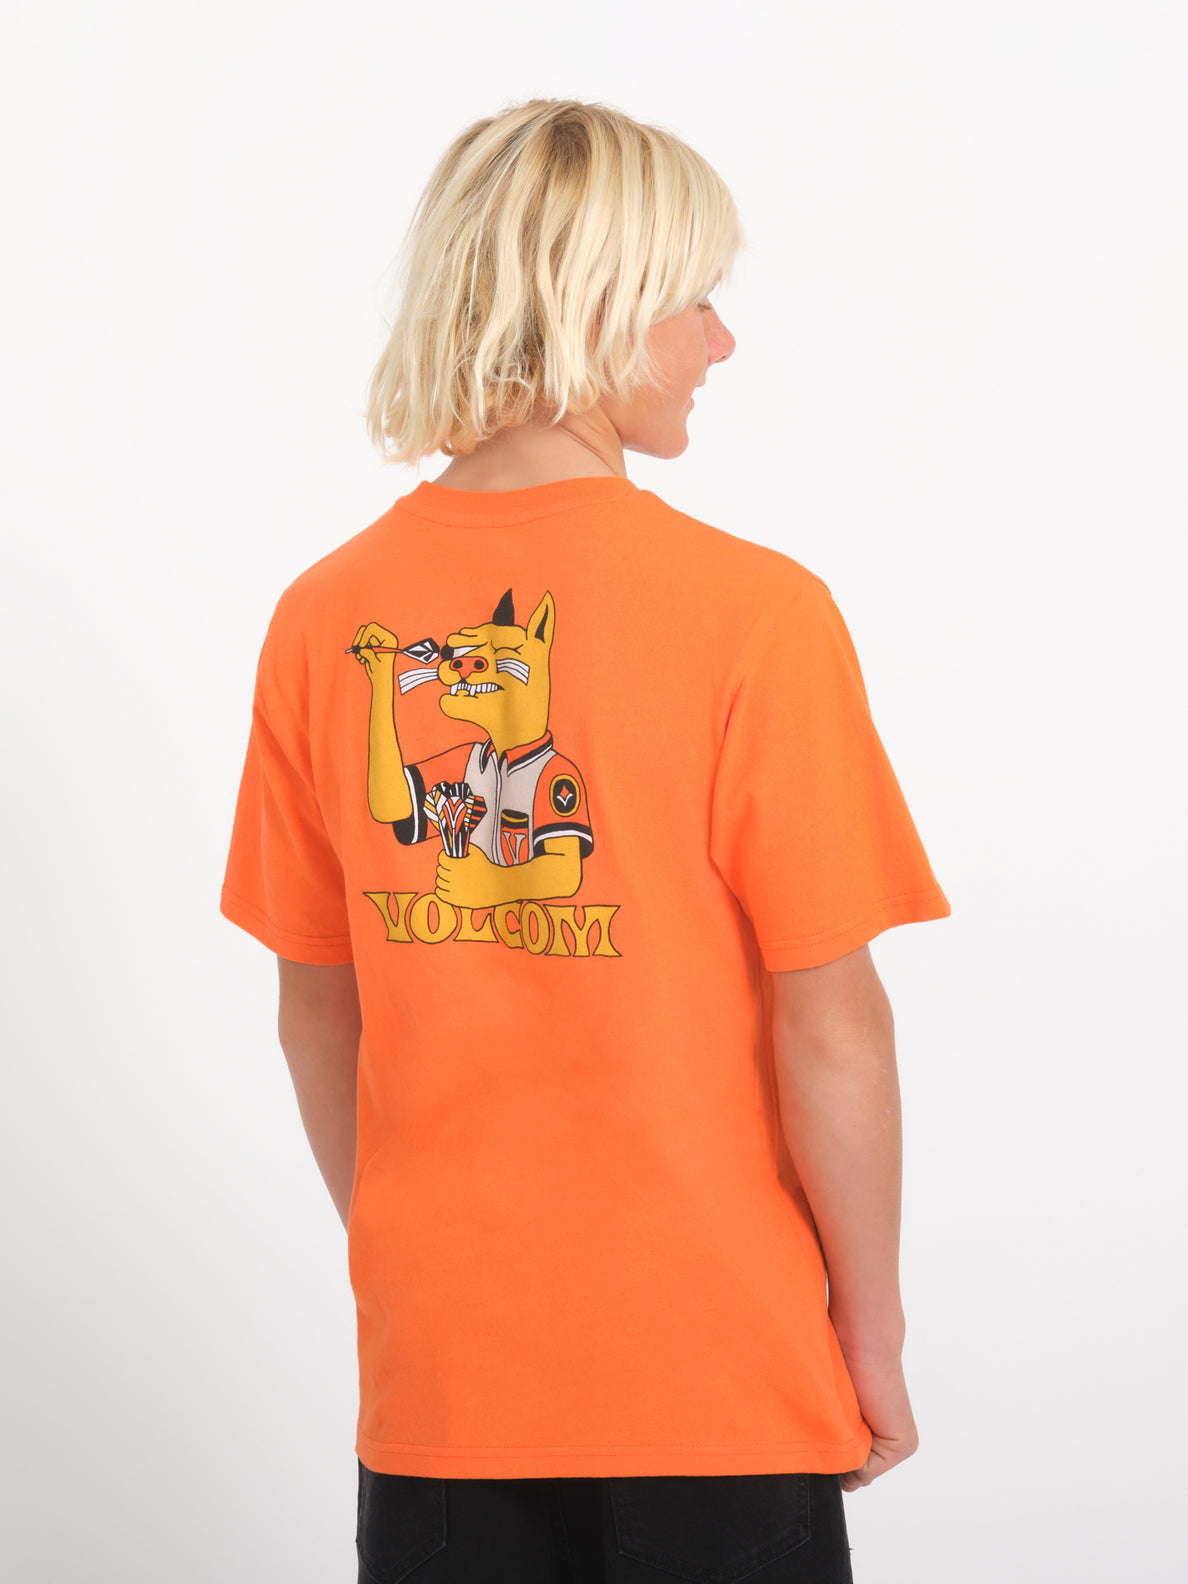 Nando Von Arb T-shirt - CARROT - (KIDS)